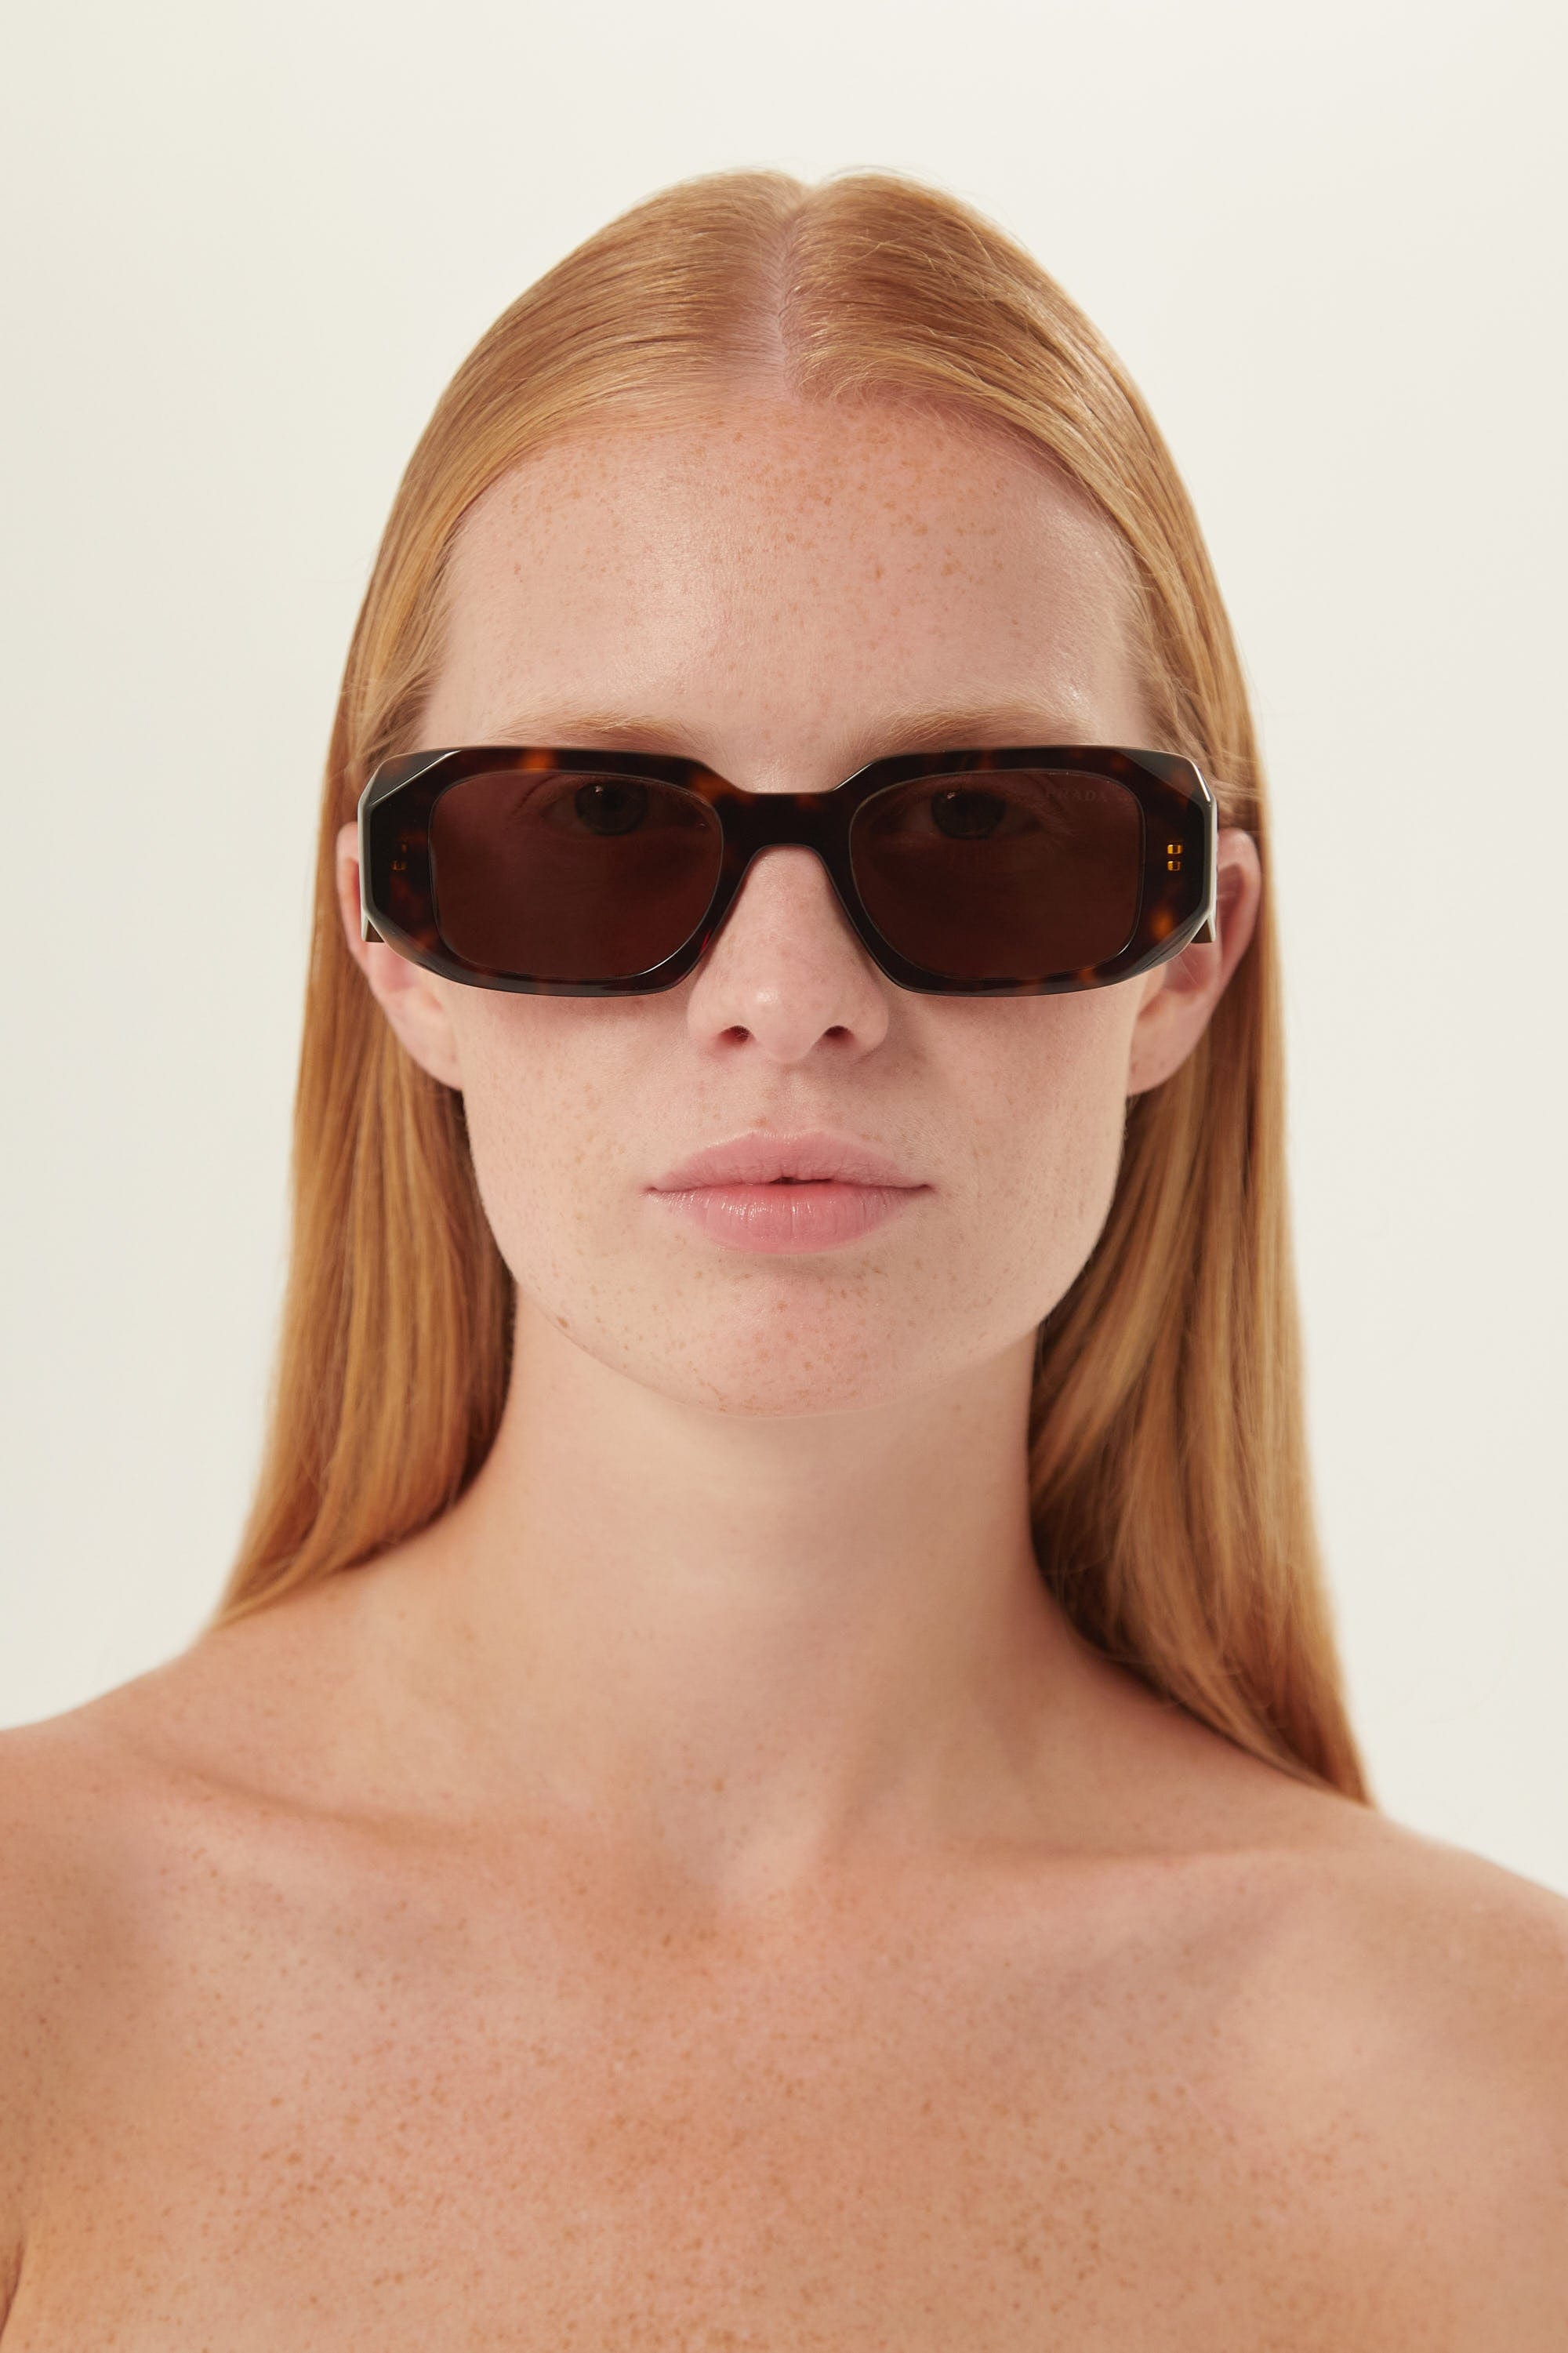 Prada symbol havana oval sunglasses - Eyewear Club